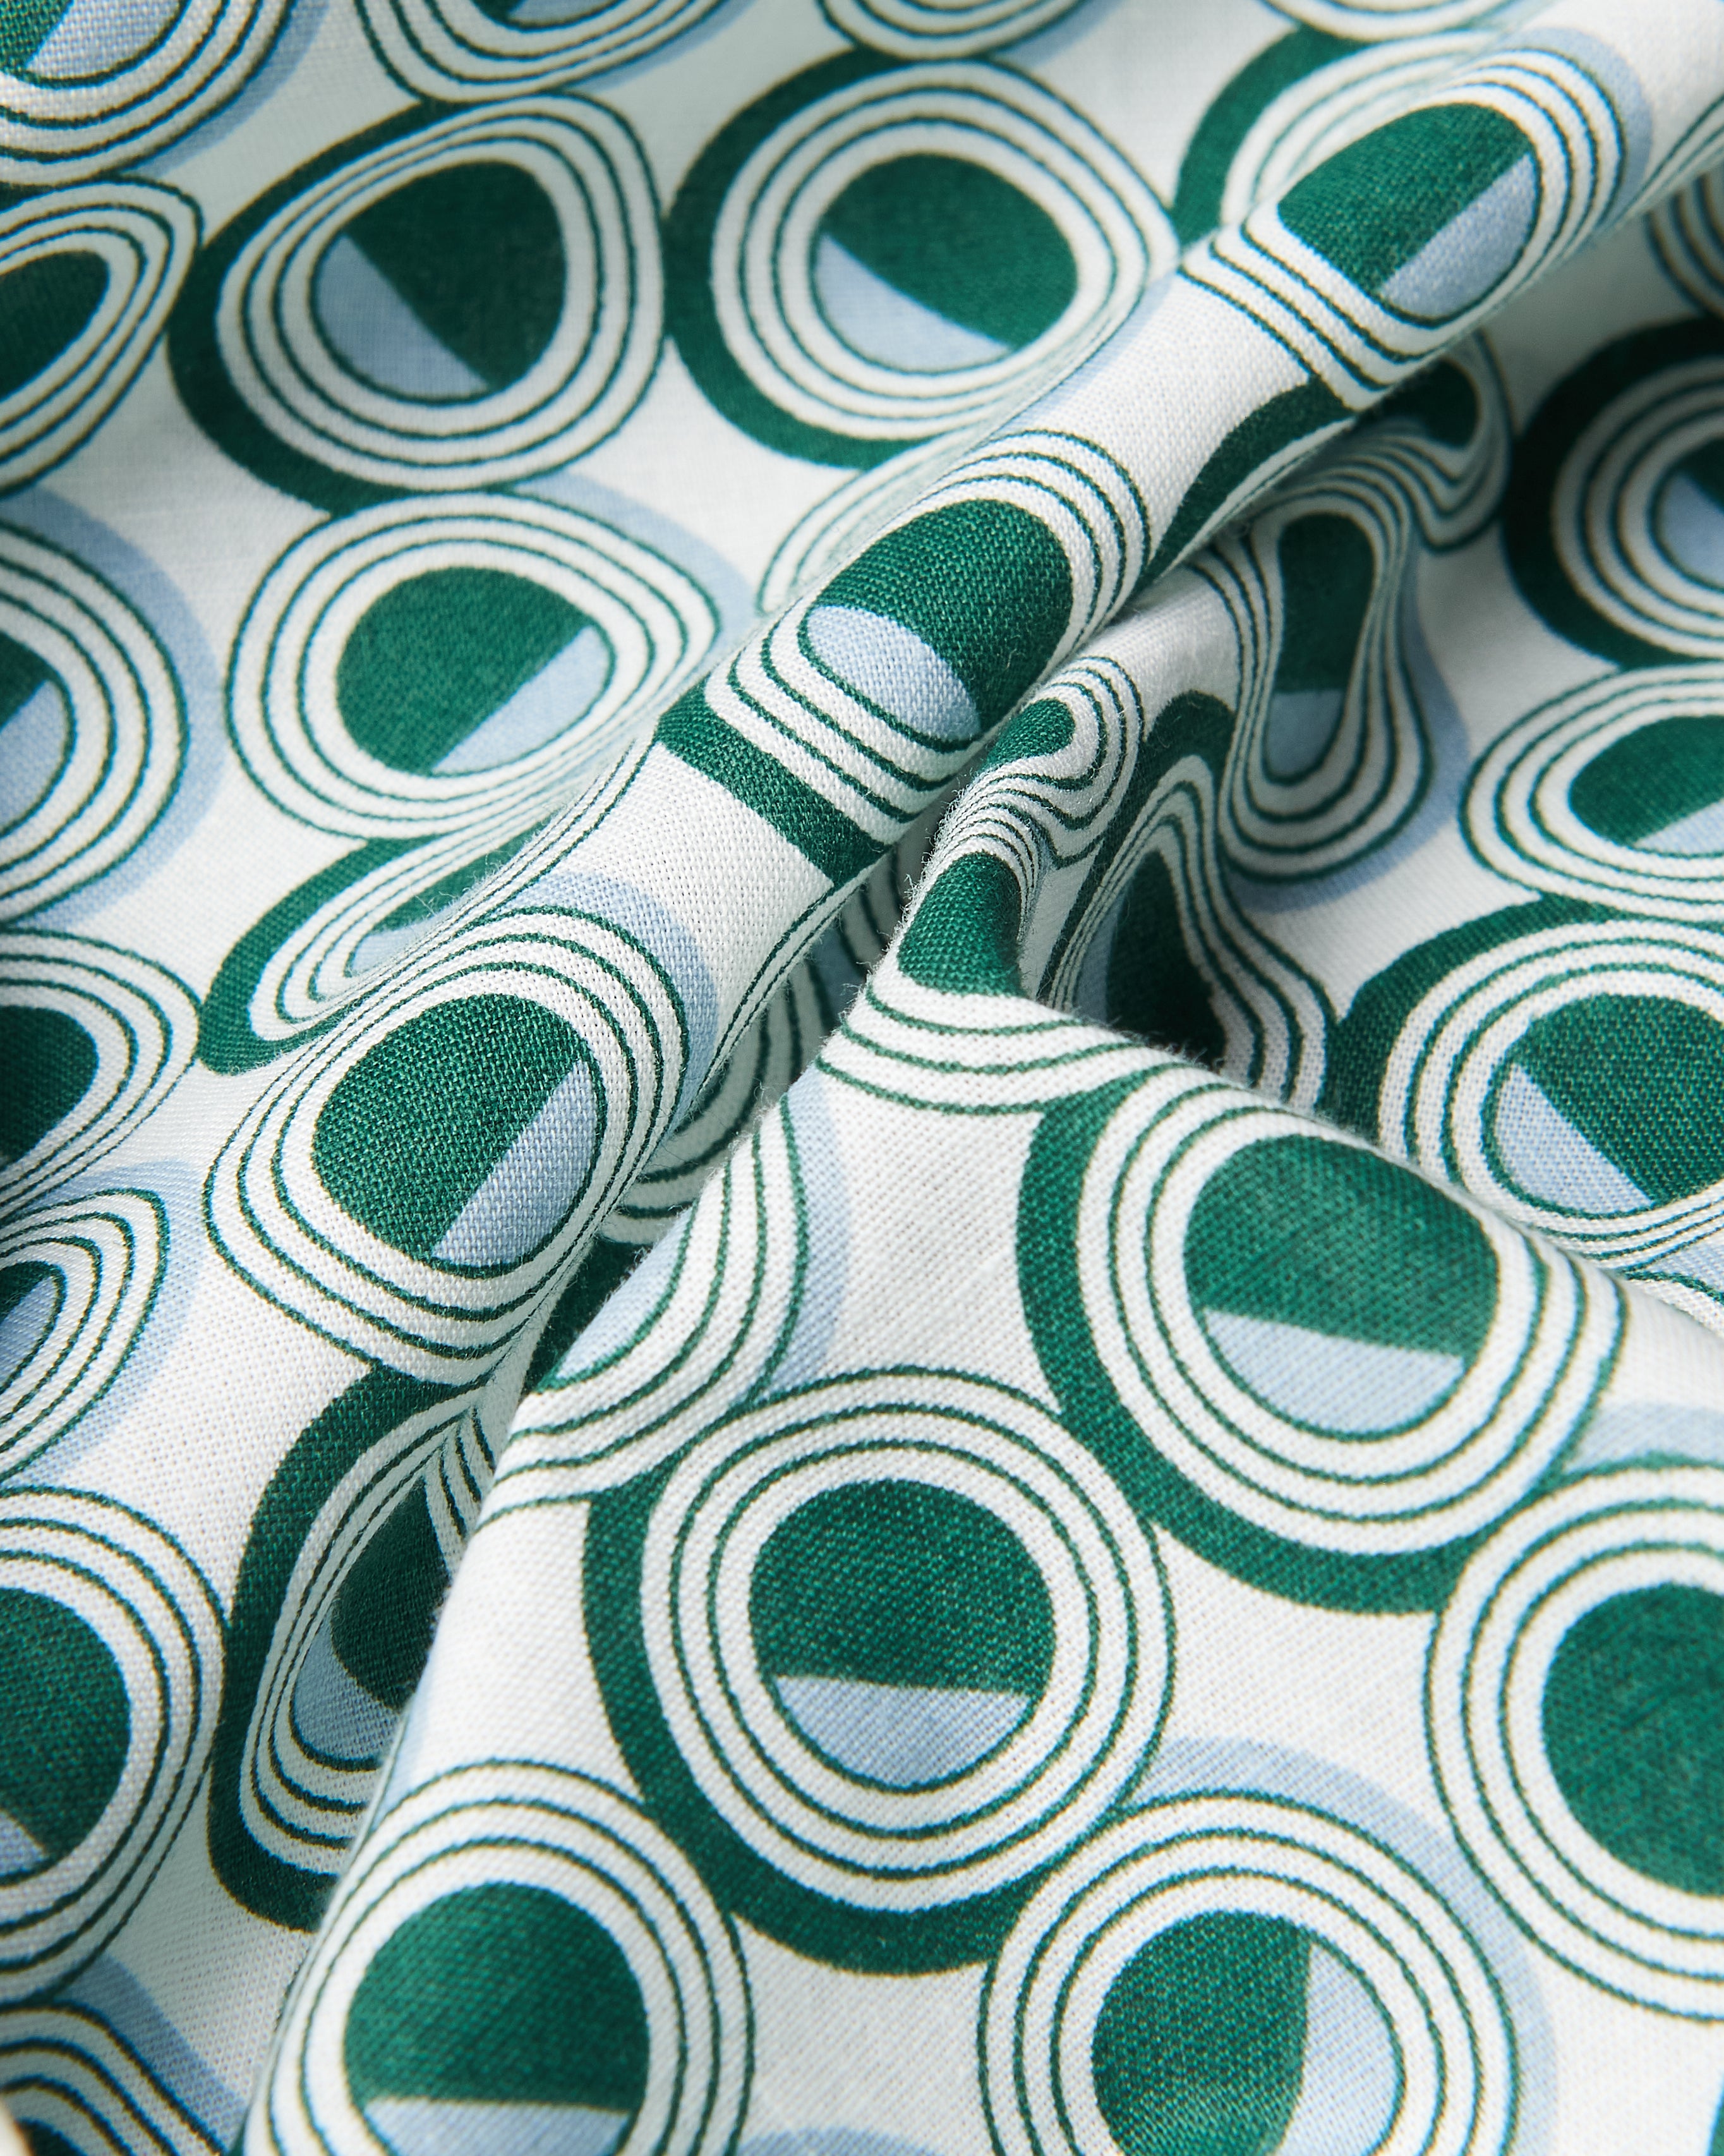 Ben Sherman Retro Circle Print Poplin Long Sleeve Shirt - Green